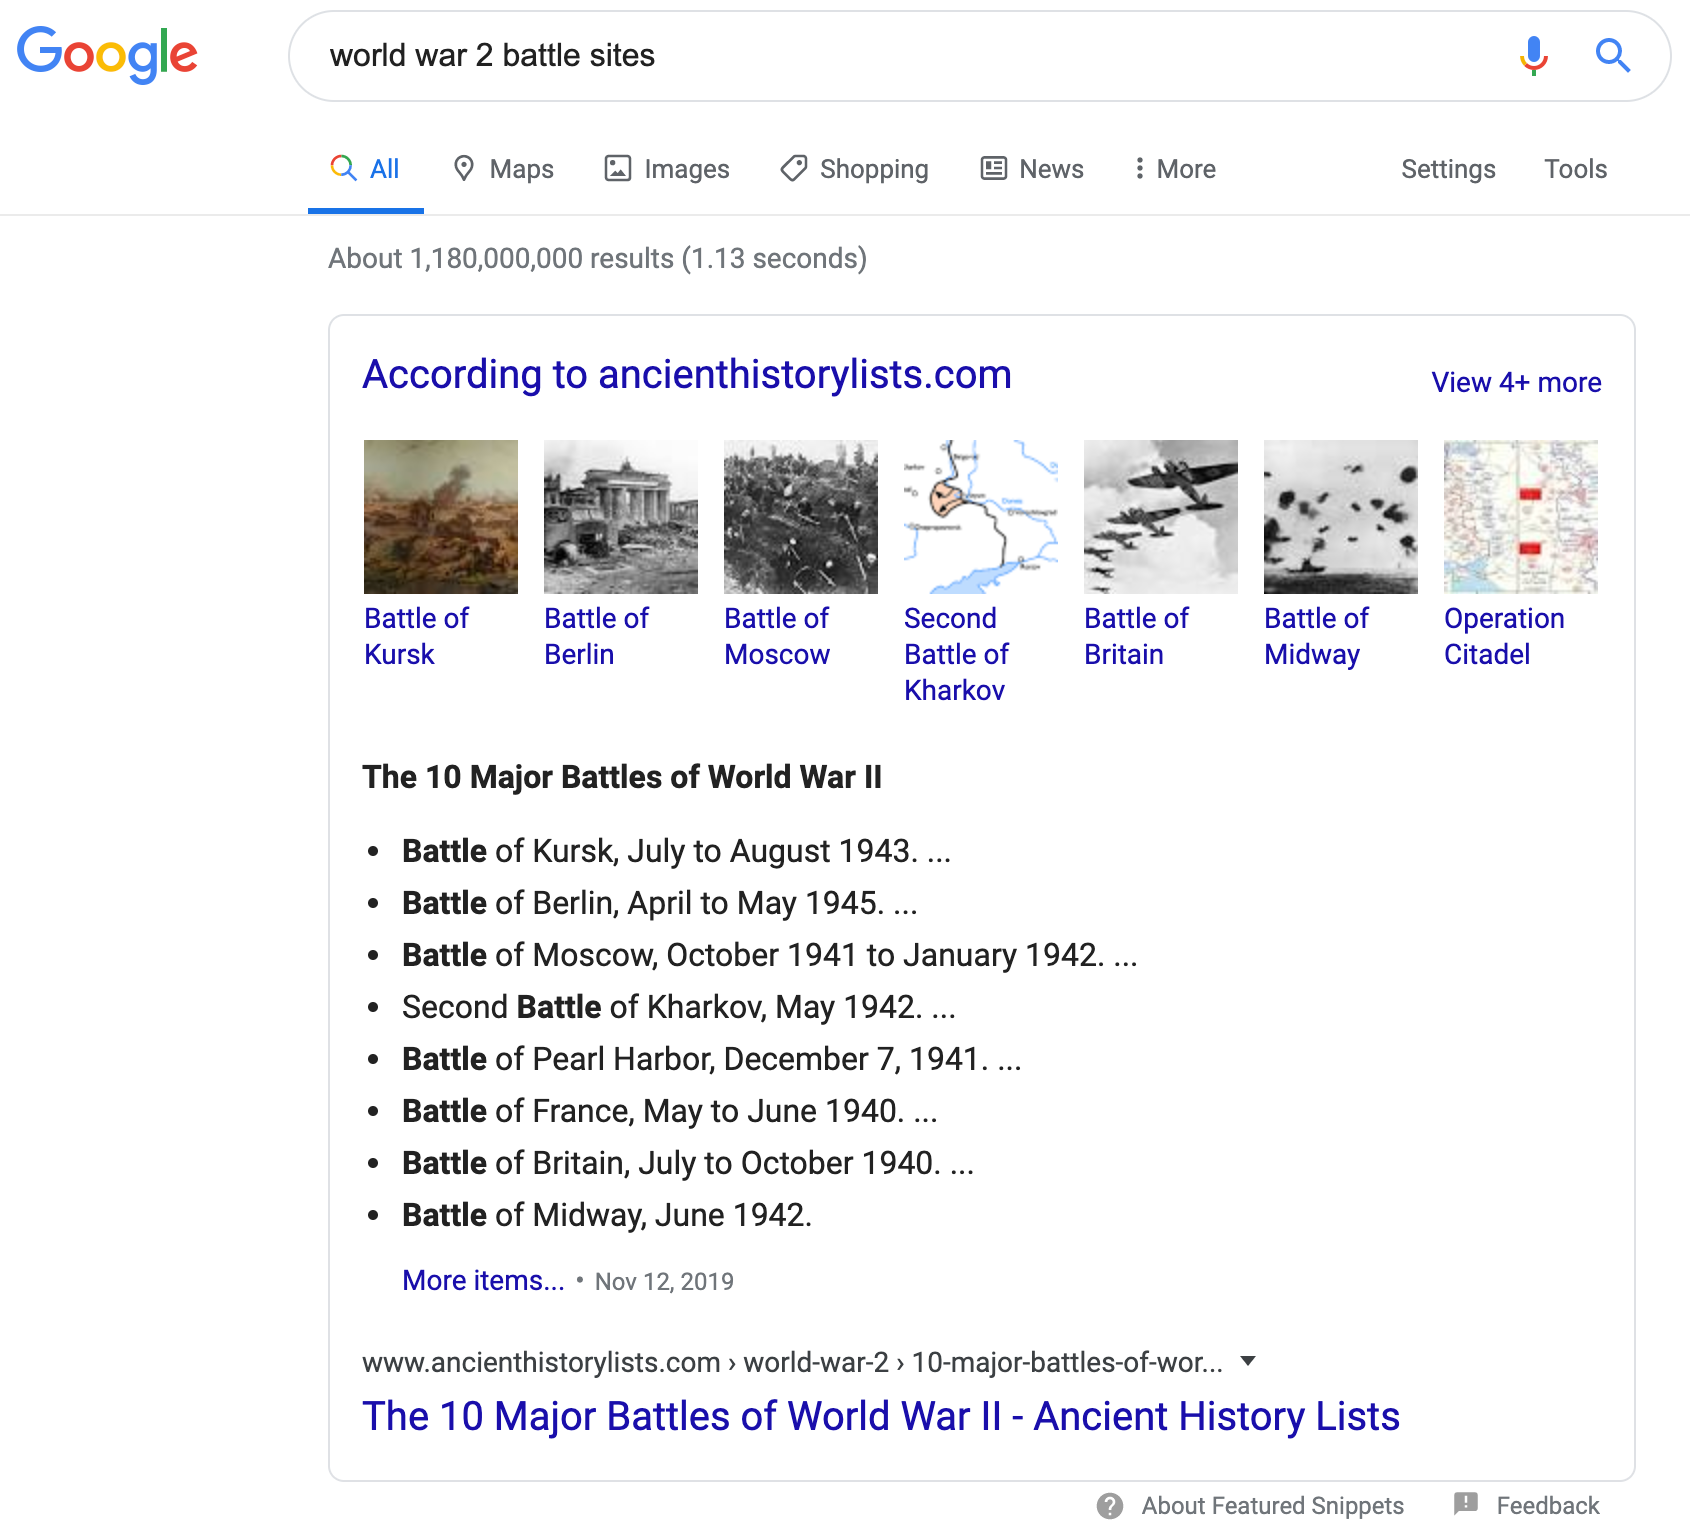 world war 2 battle sites - Google Search